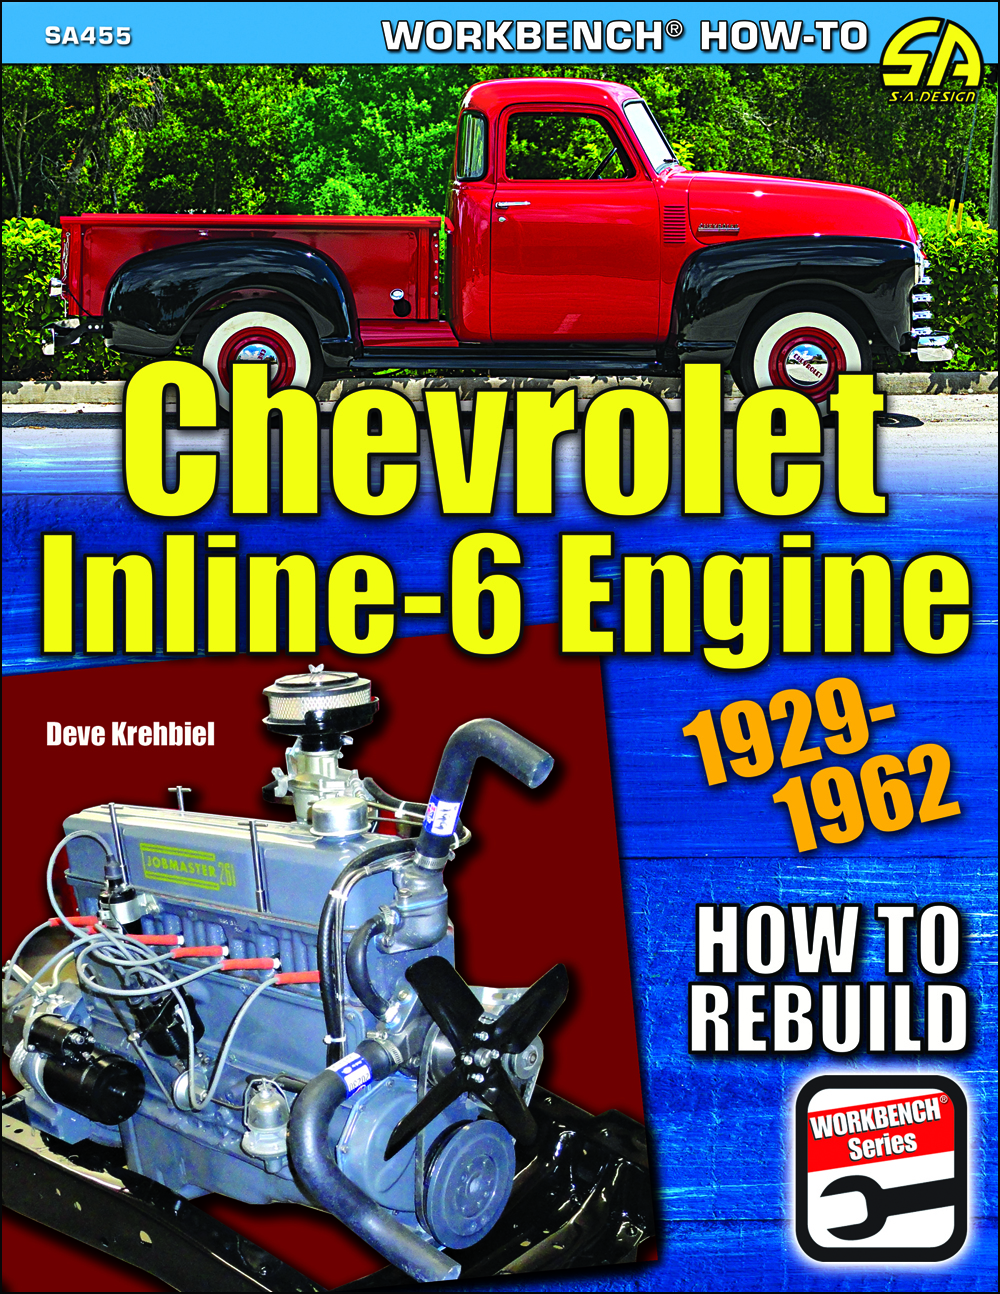 How To Rebuild Chevrolet Inline-6 Engine 1954-1962 Stovebolt